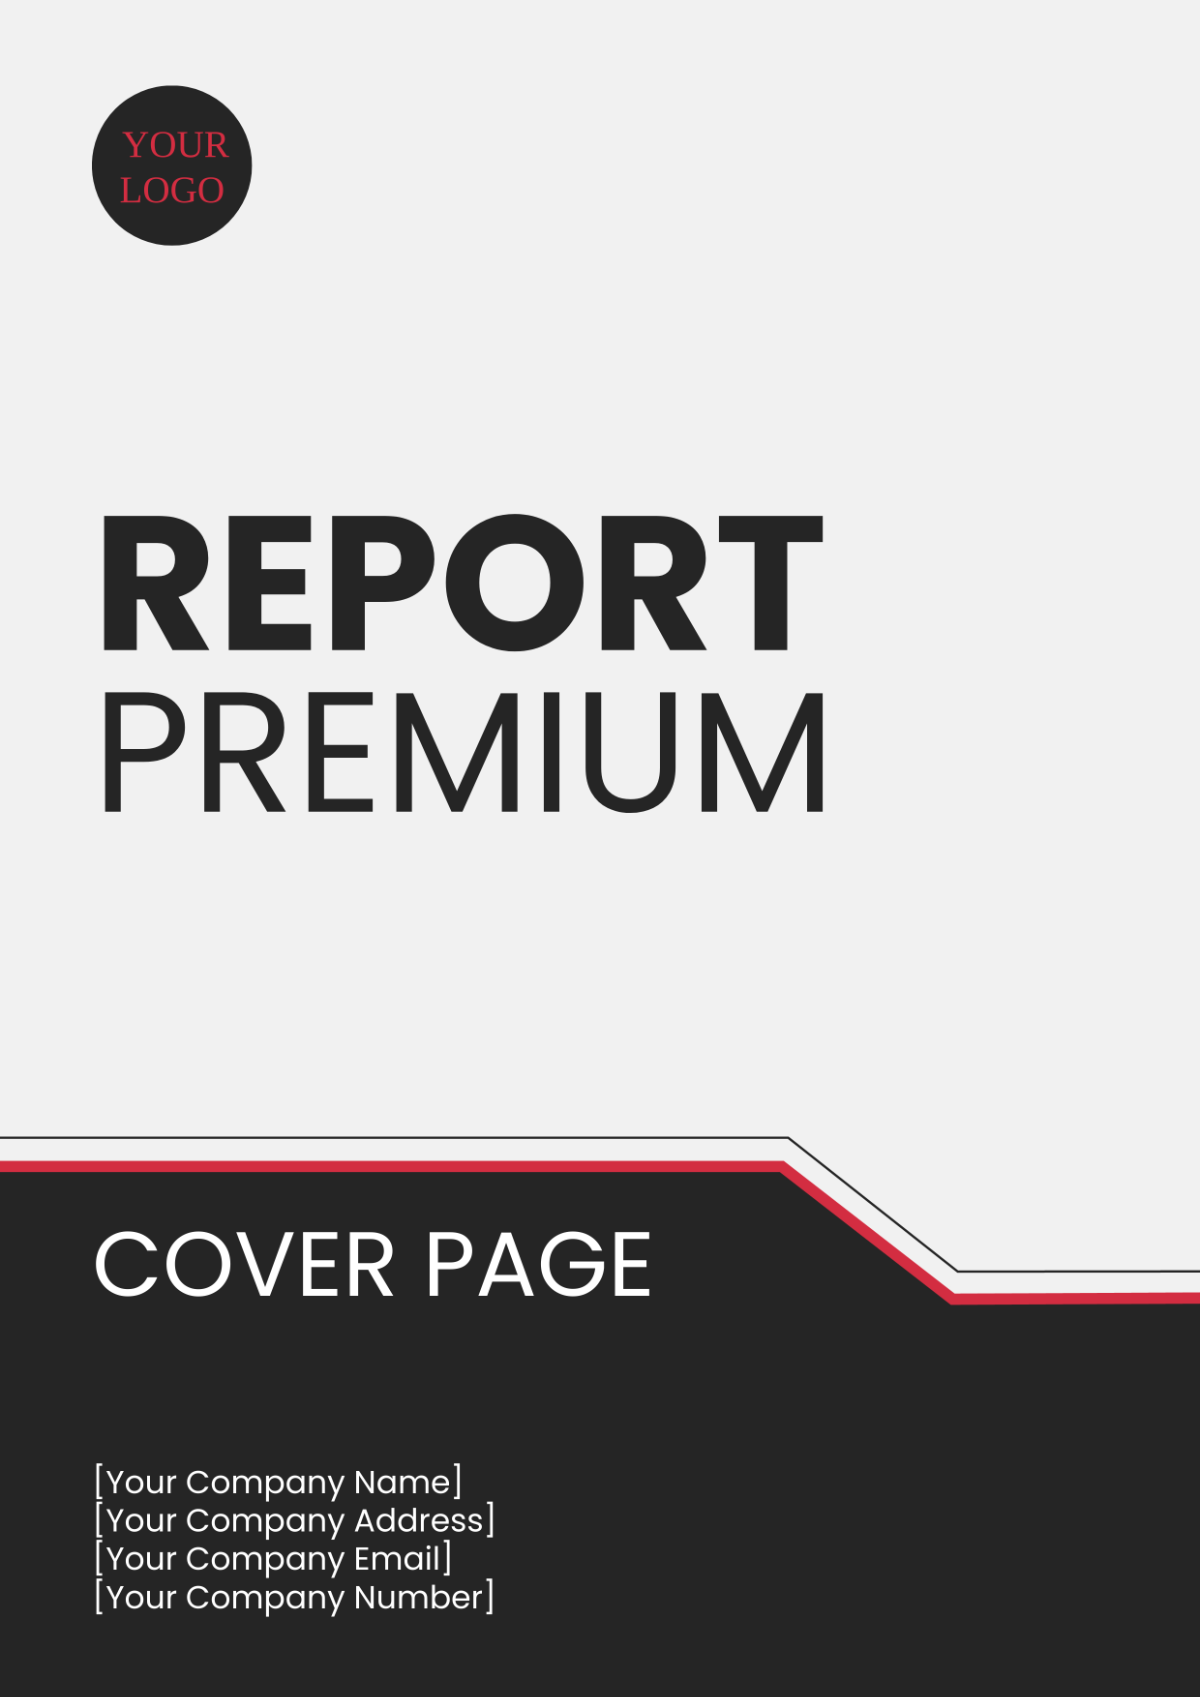 Report Premium Cover Page